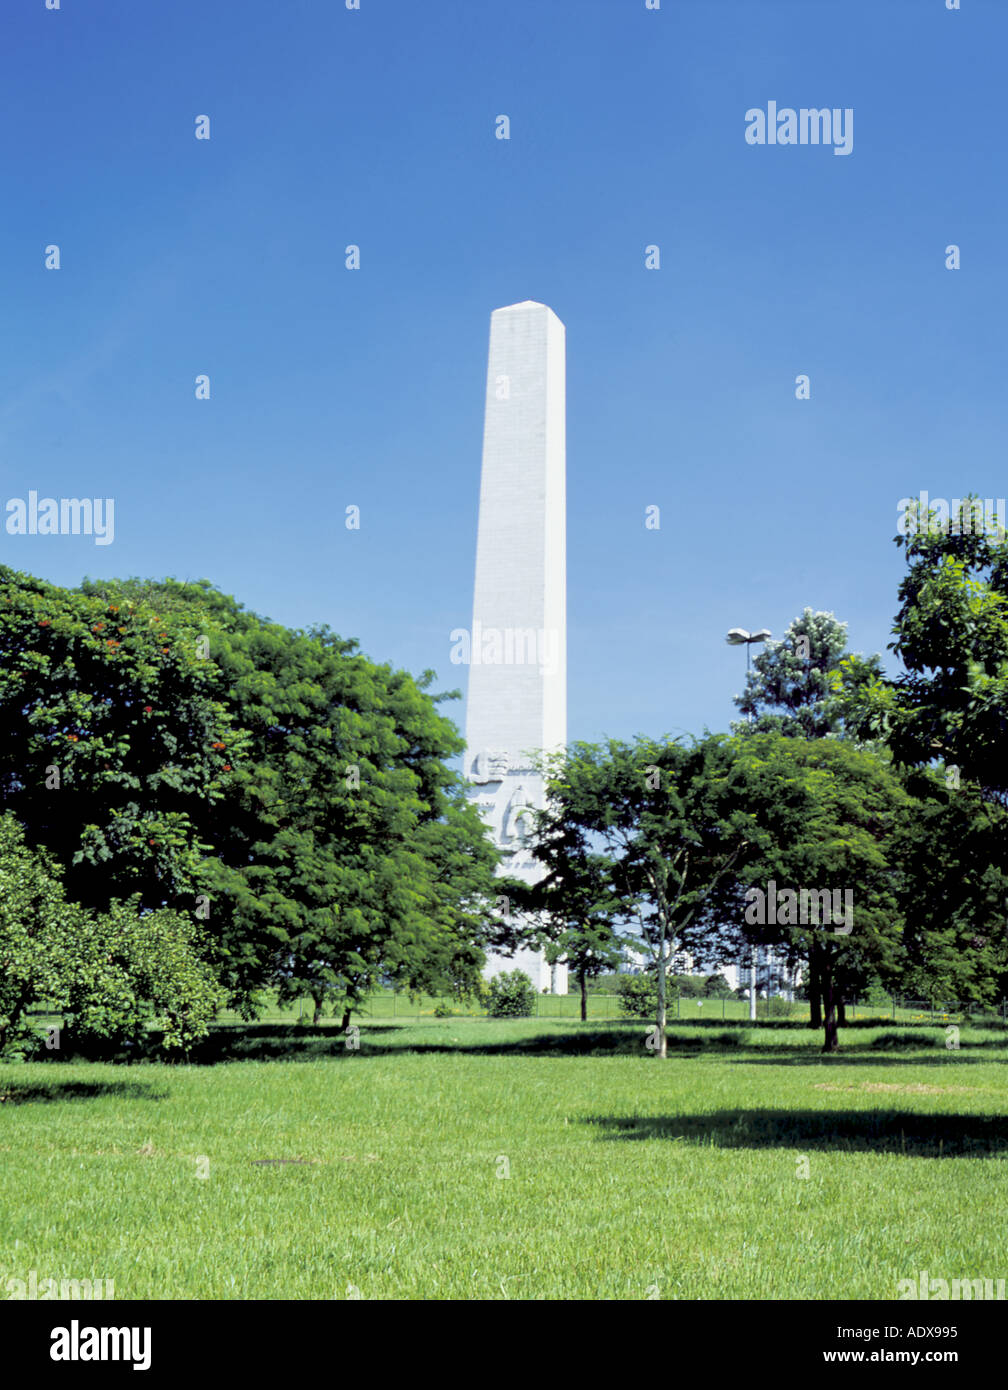 Reisen Sao Paulo Ibirapuera Wahrzeichen Obelisk Bäume Wolken Himmel Rasen Paulo Sao Hauptstadt Freizeitpark Reisen Brasilien Stockfoto